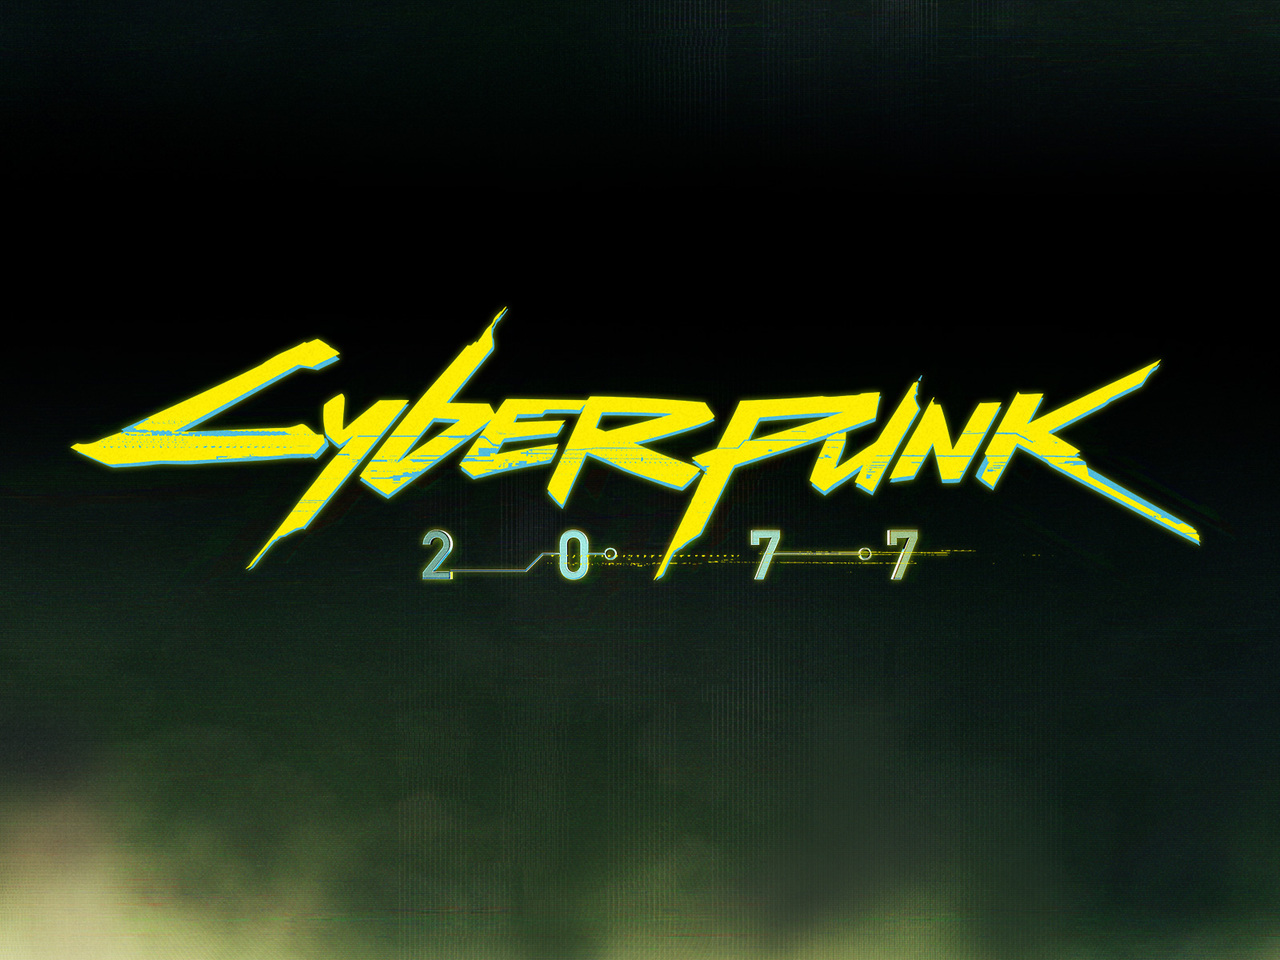 ps4 - Cyberpunk 2077 